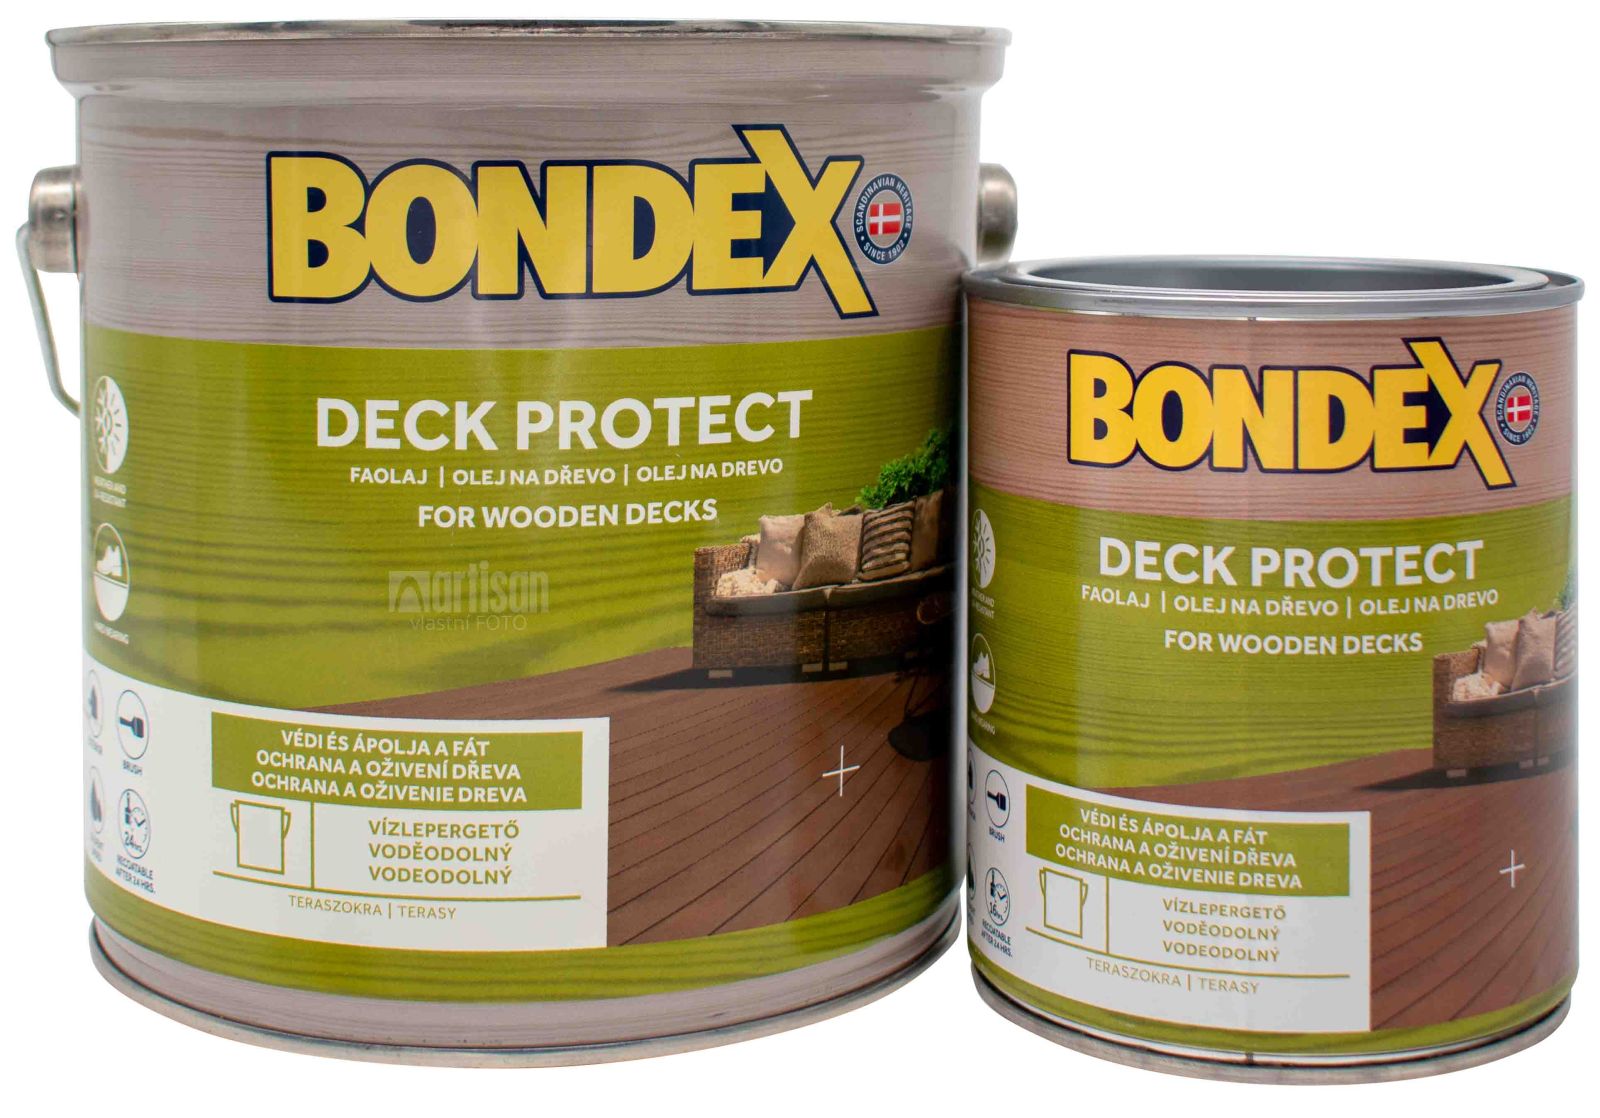 BONDEX Deck Protect v objeme 0.75 l a 2.5 l